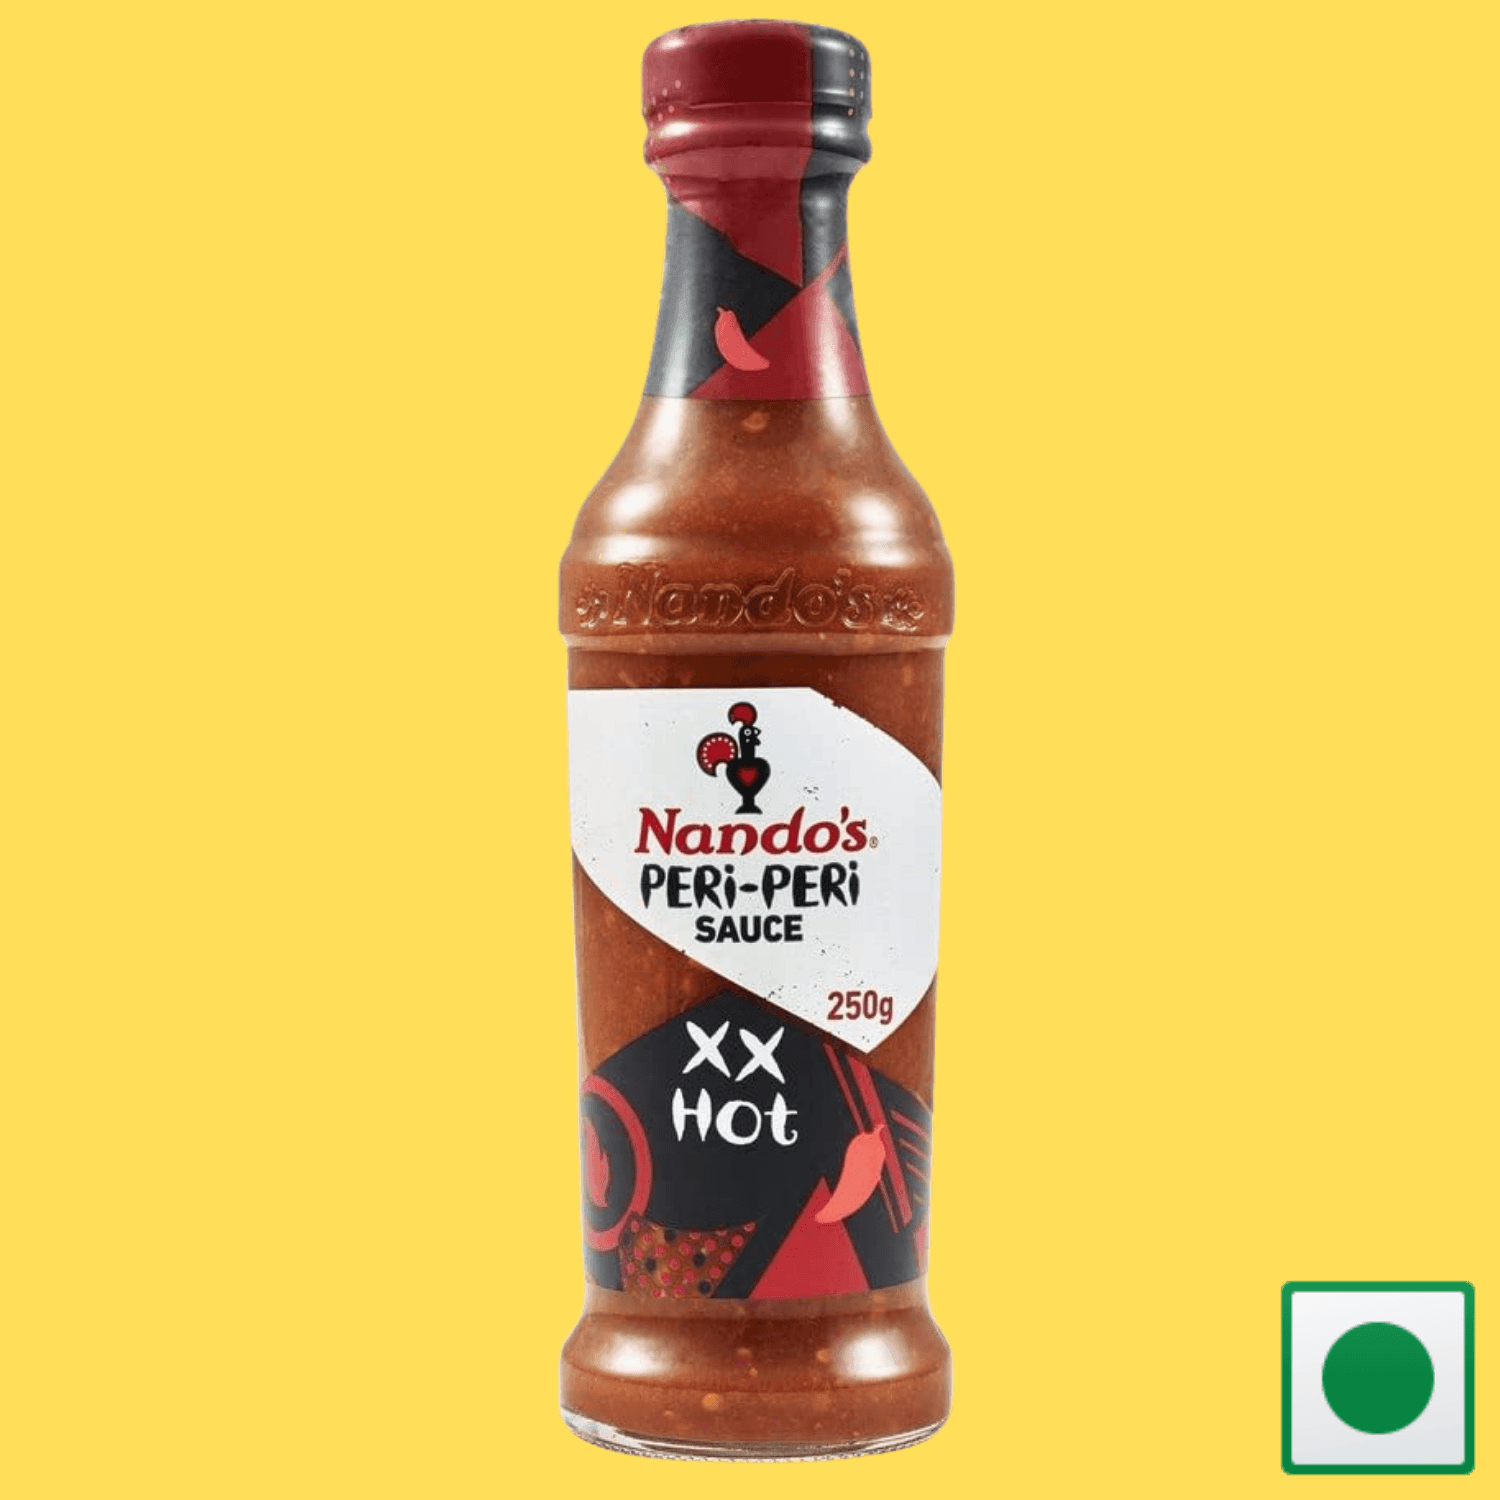 Nando's Peri Peri XX Hot Sauce,250g (Imported) - Super 7 Mart